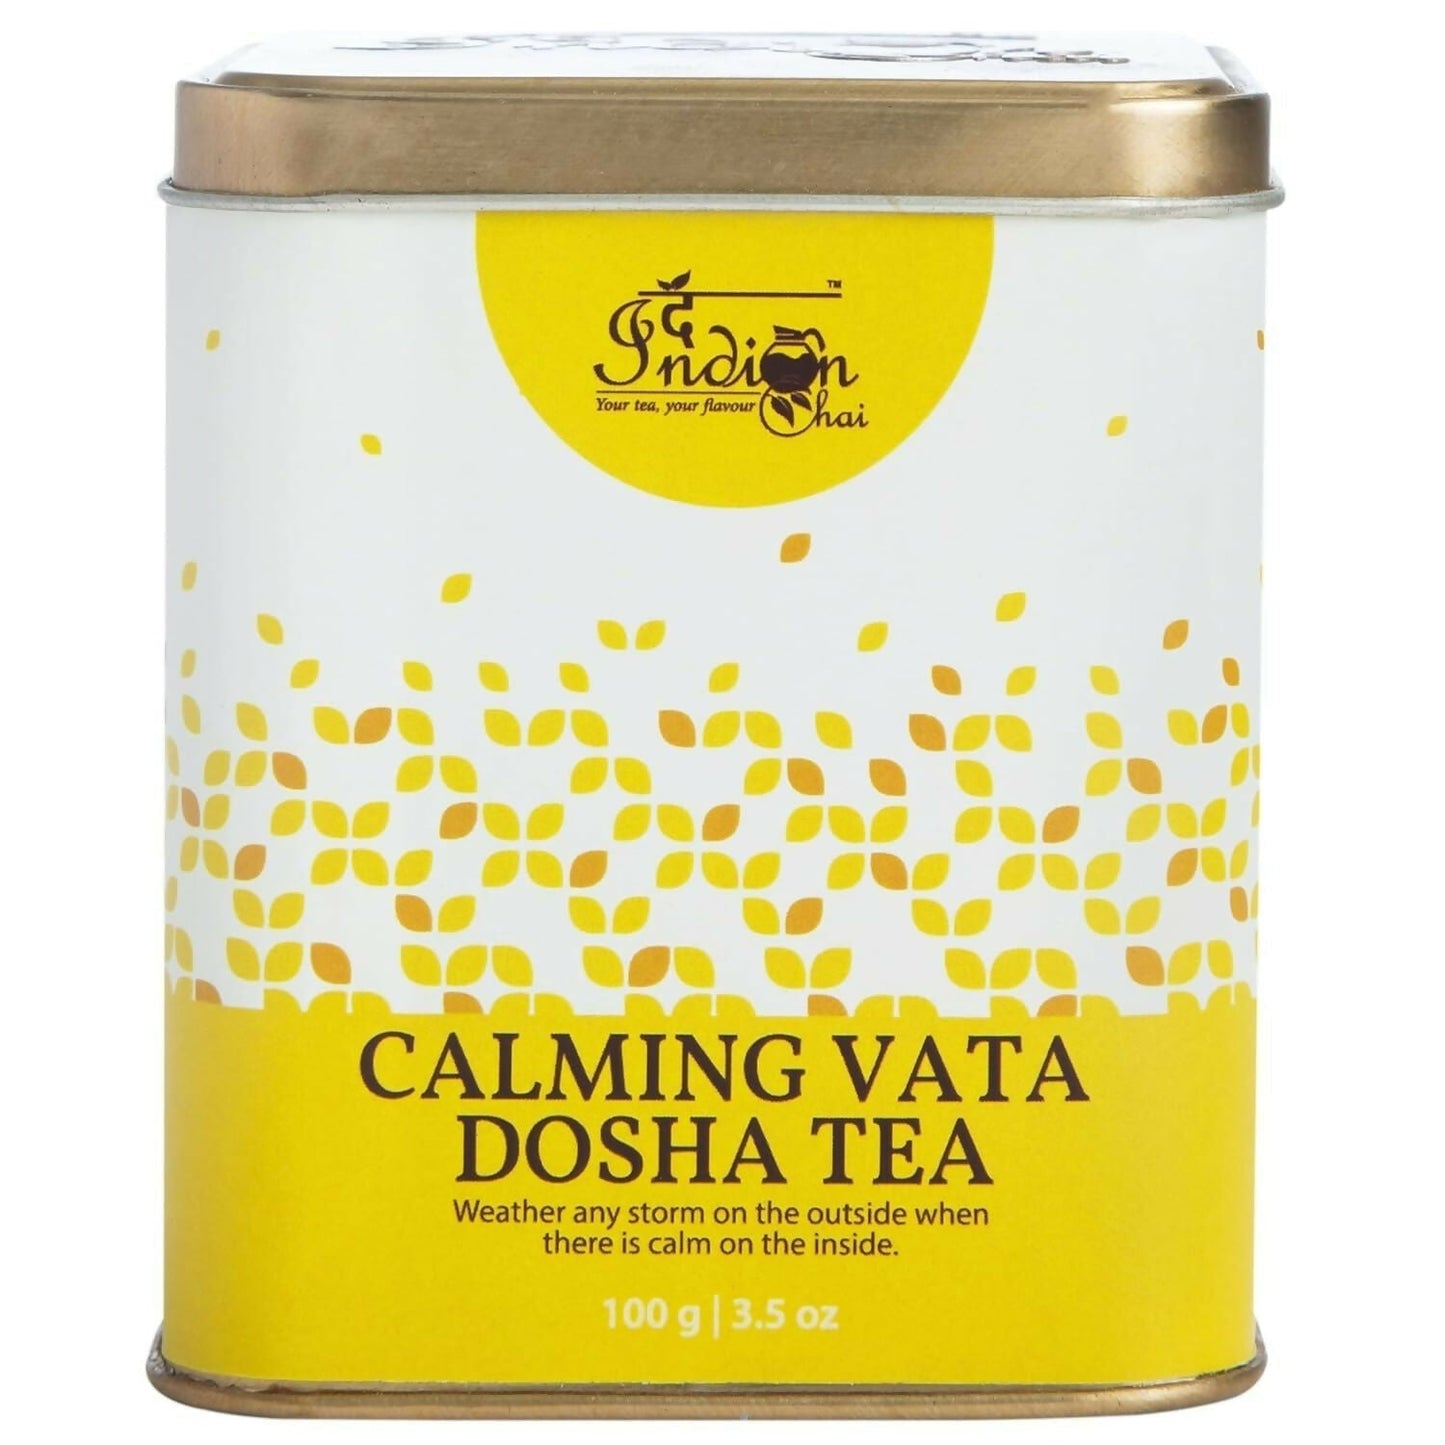 The Indian Chai - Calming Vata Dosha Tea